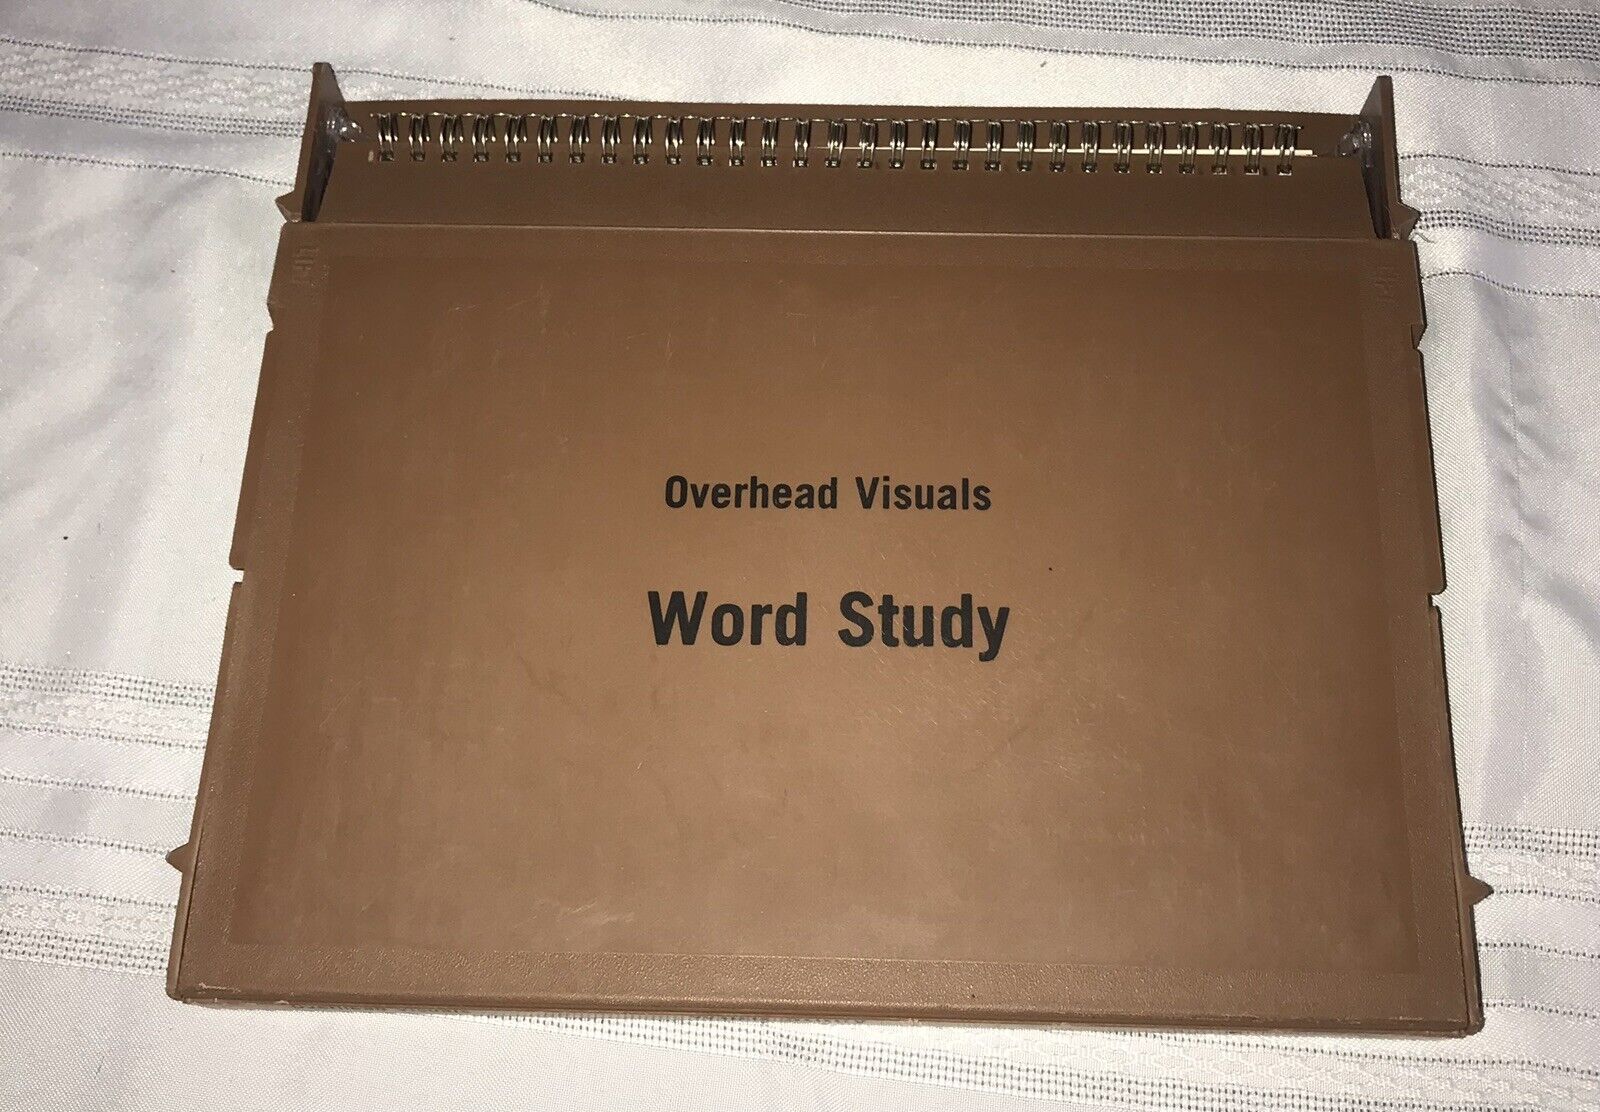 B6 VTG SCHOOL OVERHEAD PROJECTOR VISUAL WORD STUDY PRONUNCIATION & MEANING 1969